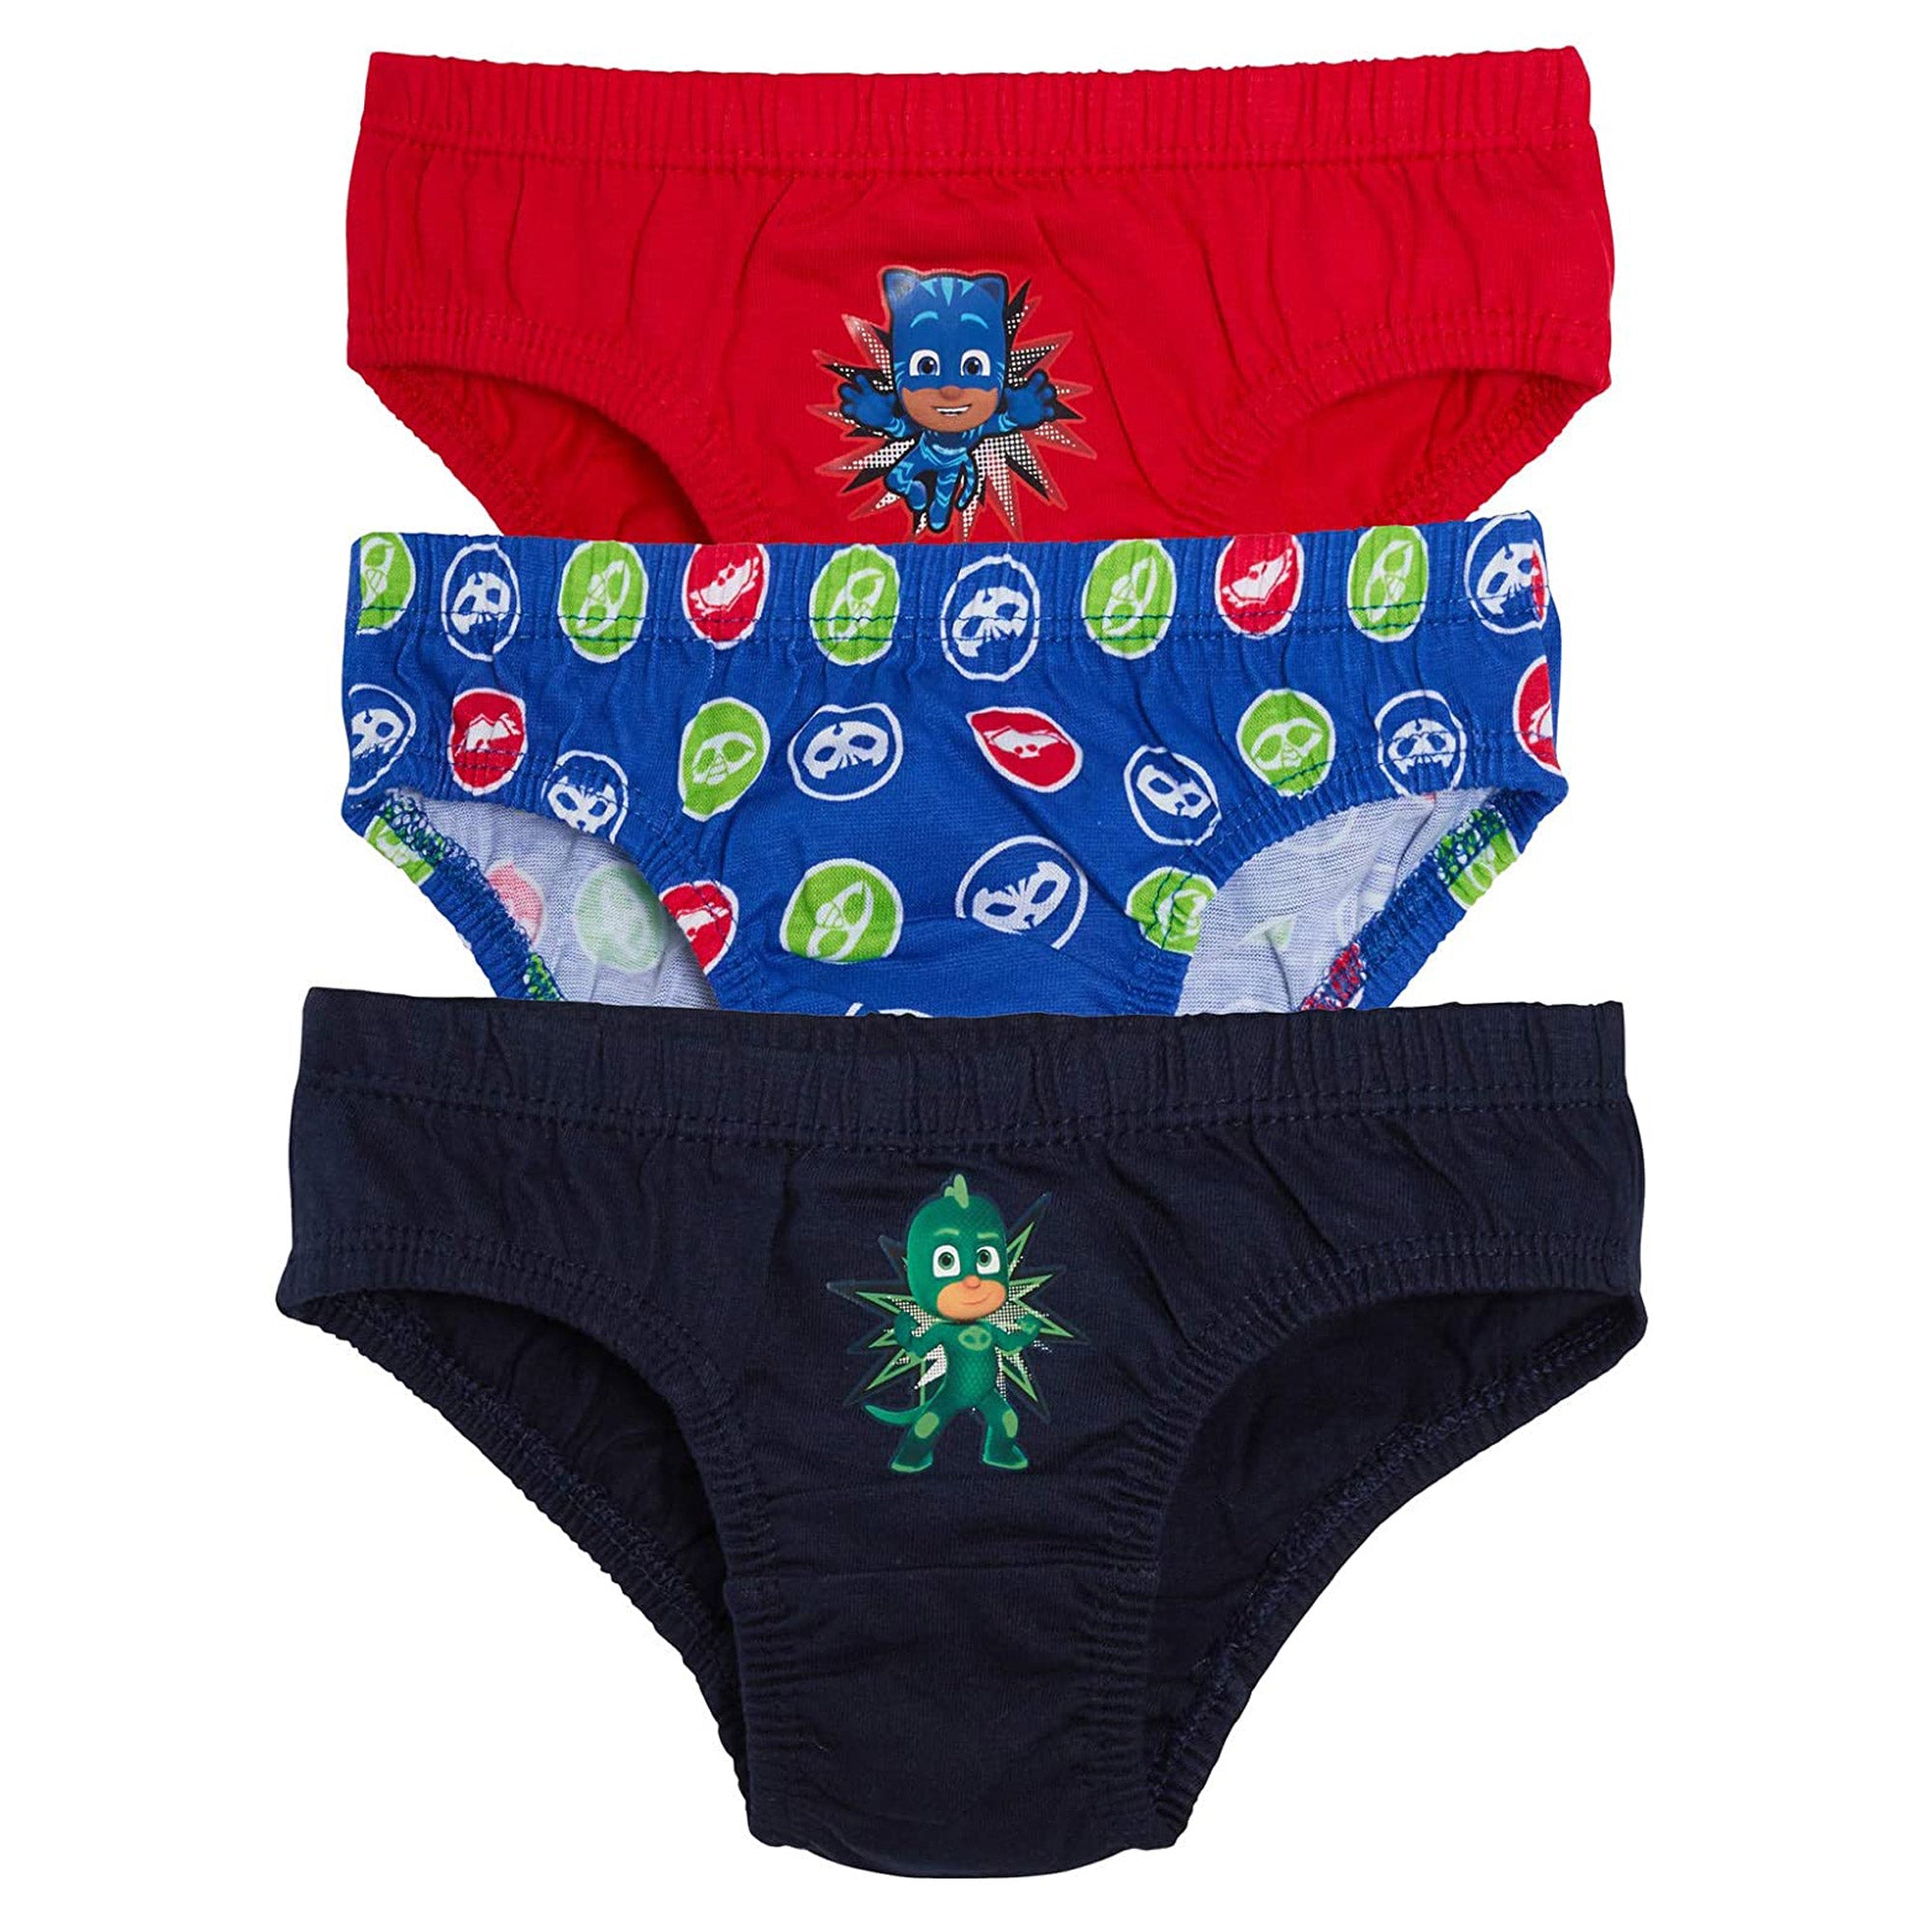 PJ Masks Kids Underwear Briefs Pants Blue 3 Pack